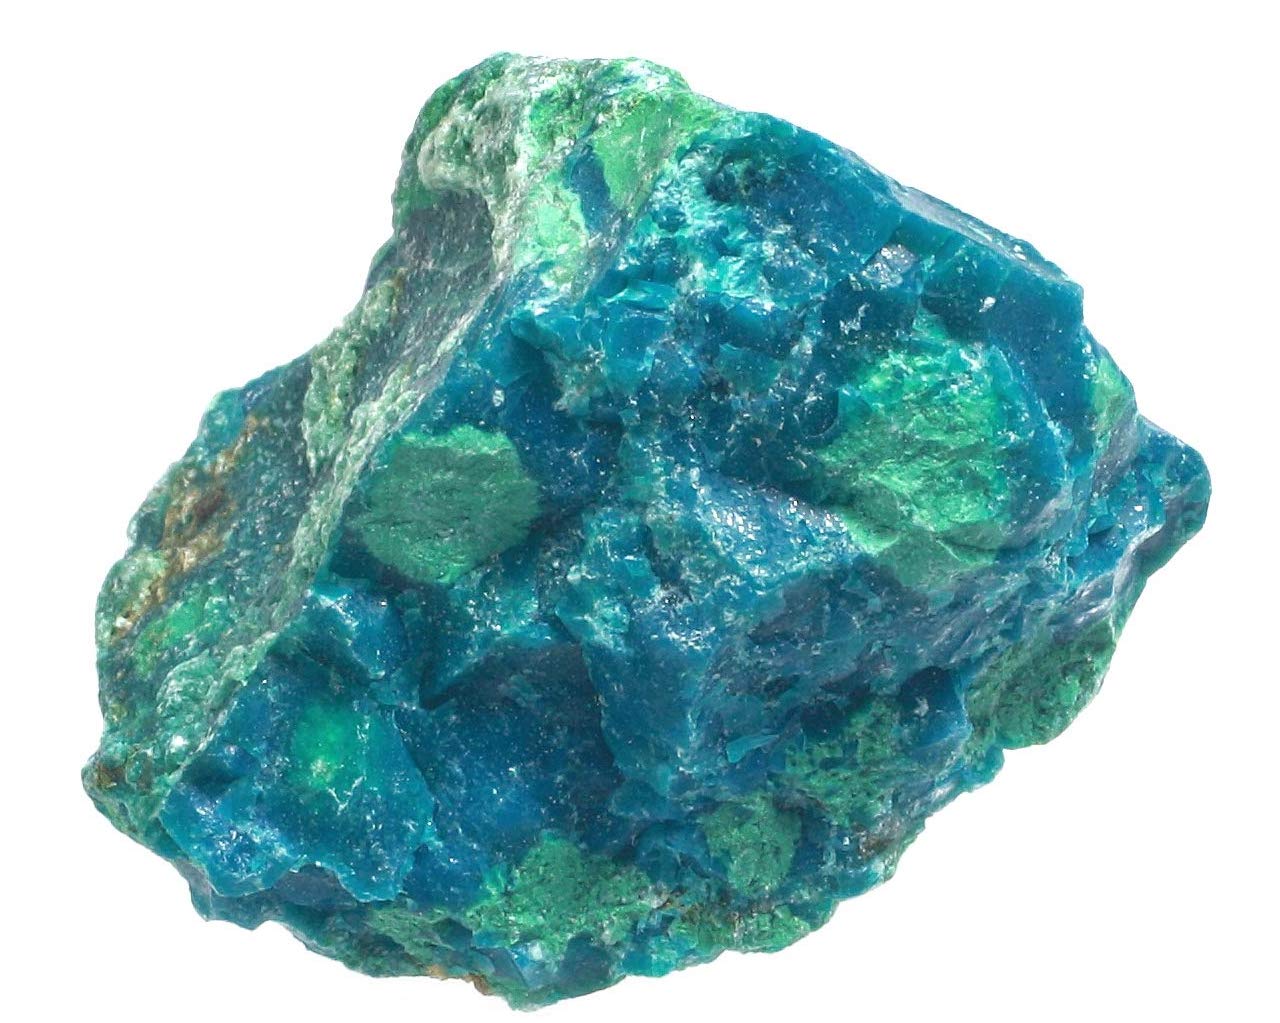 Chrysocolla Stone - Light Green and Aqua Blue